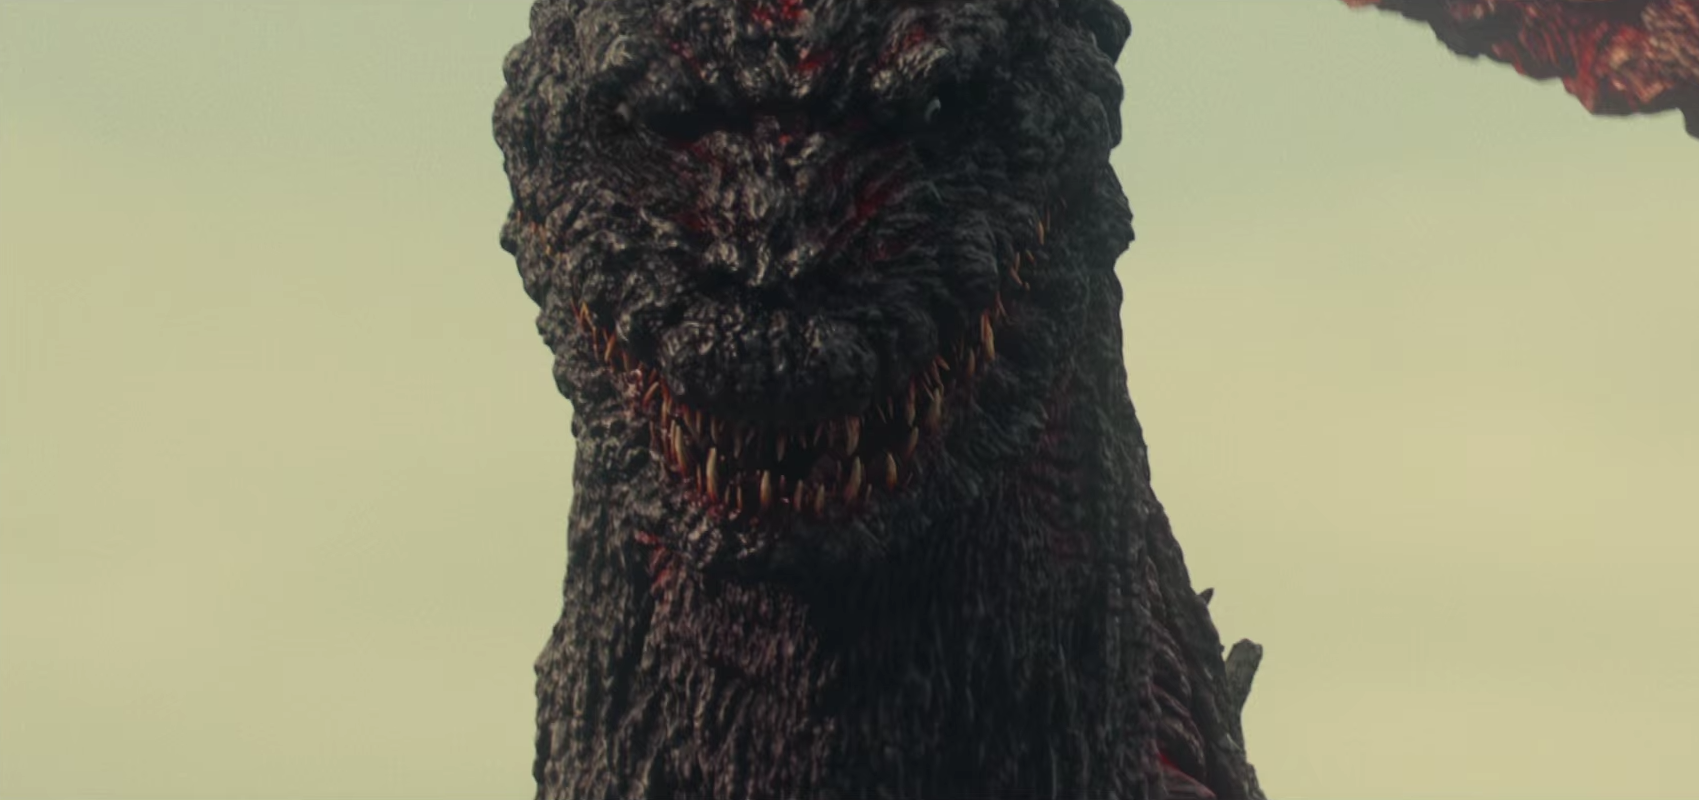 Godzilla Resurgence Talks Too Much